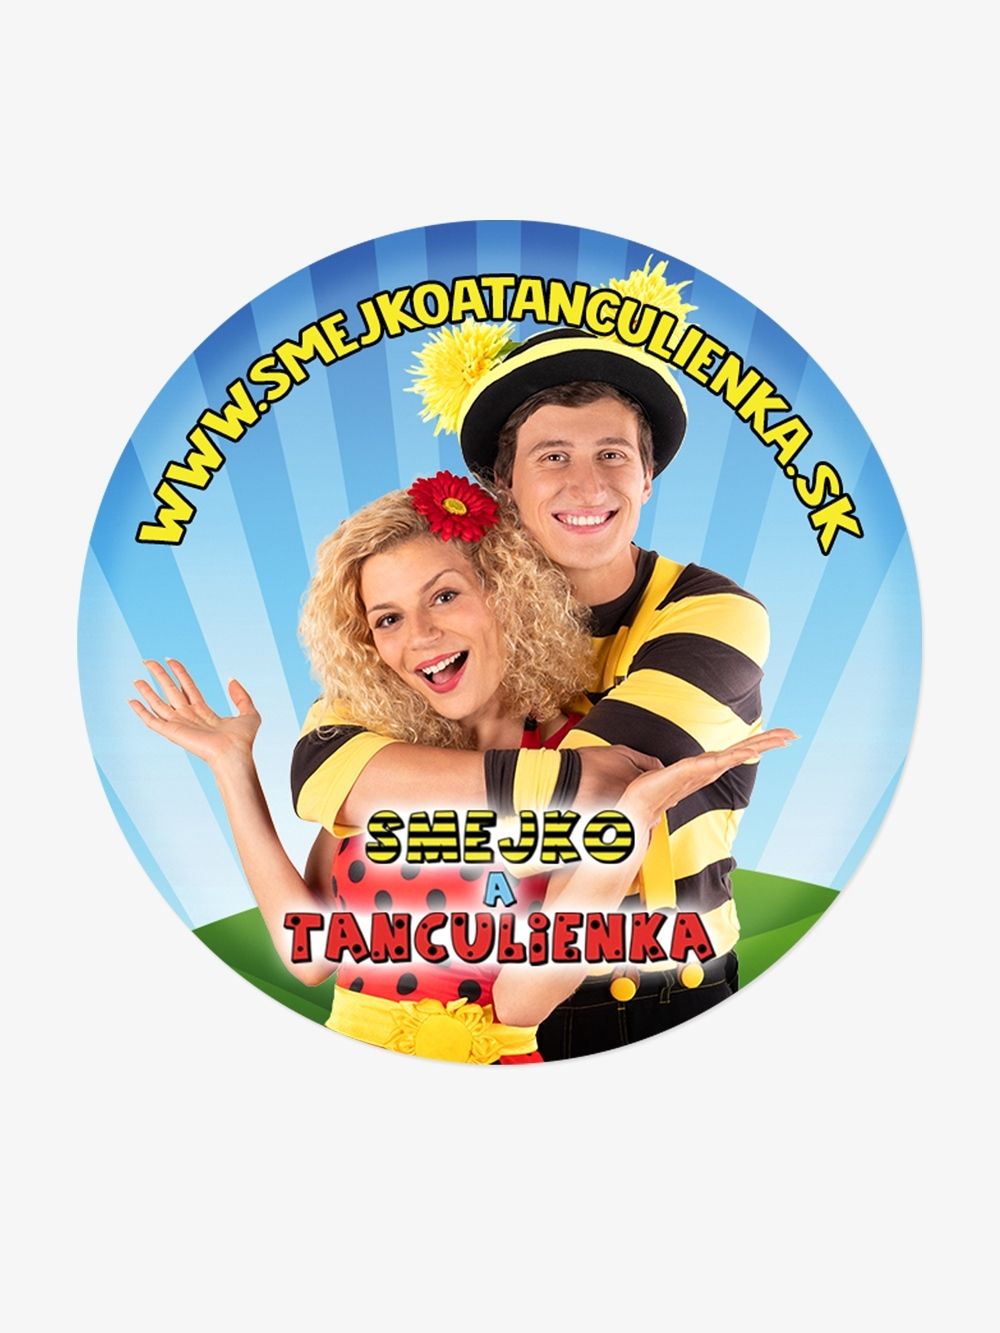 Badge Smejko and Tanculienka